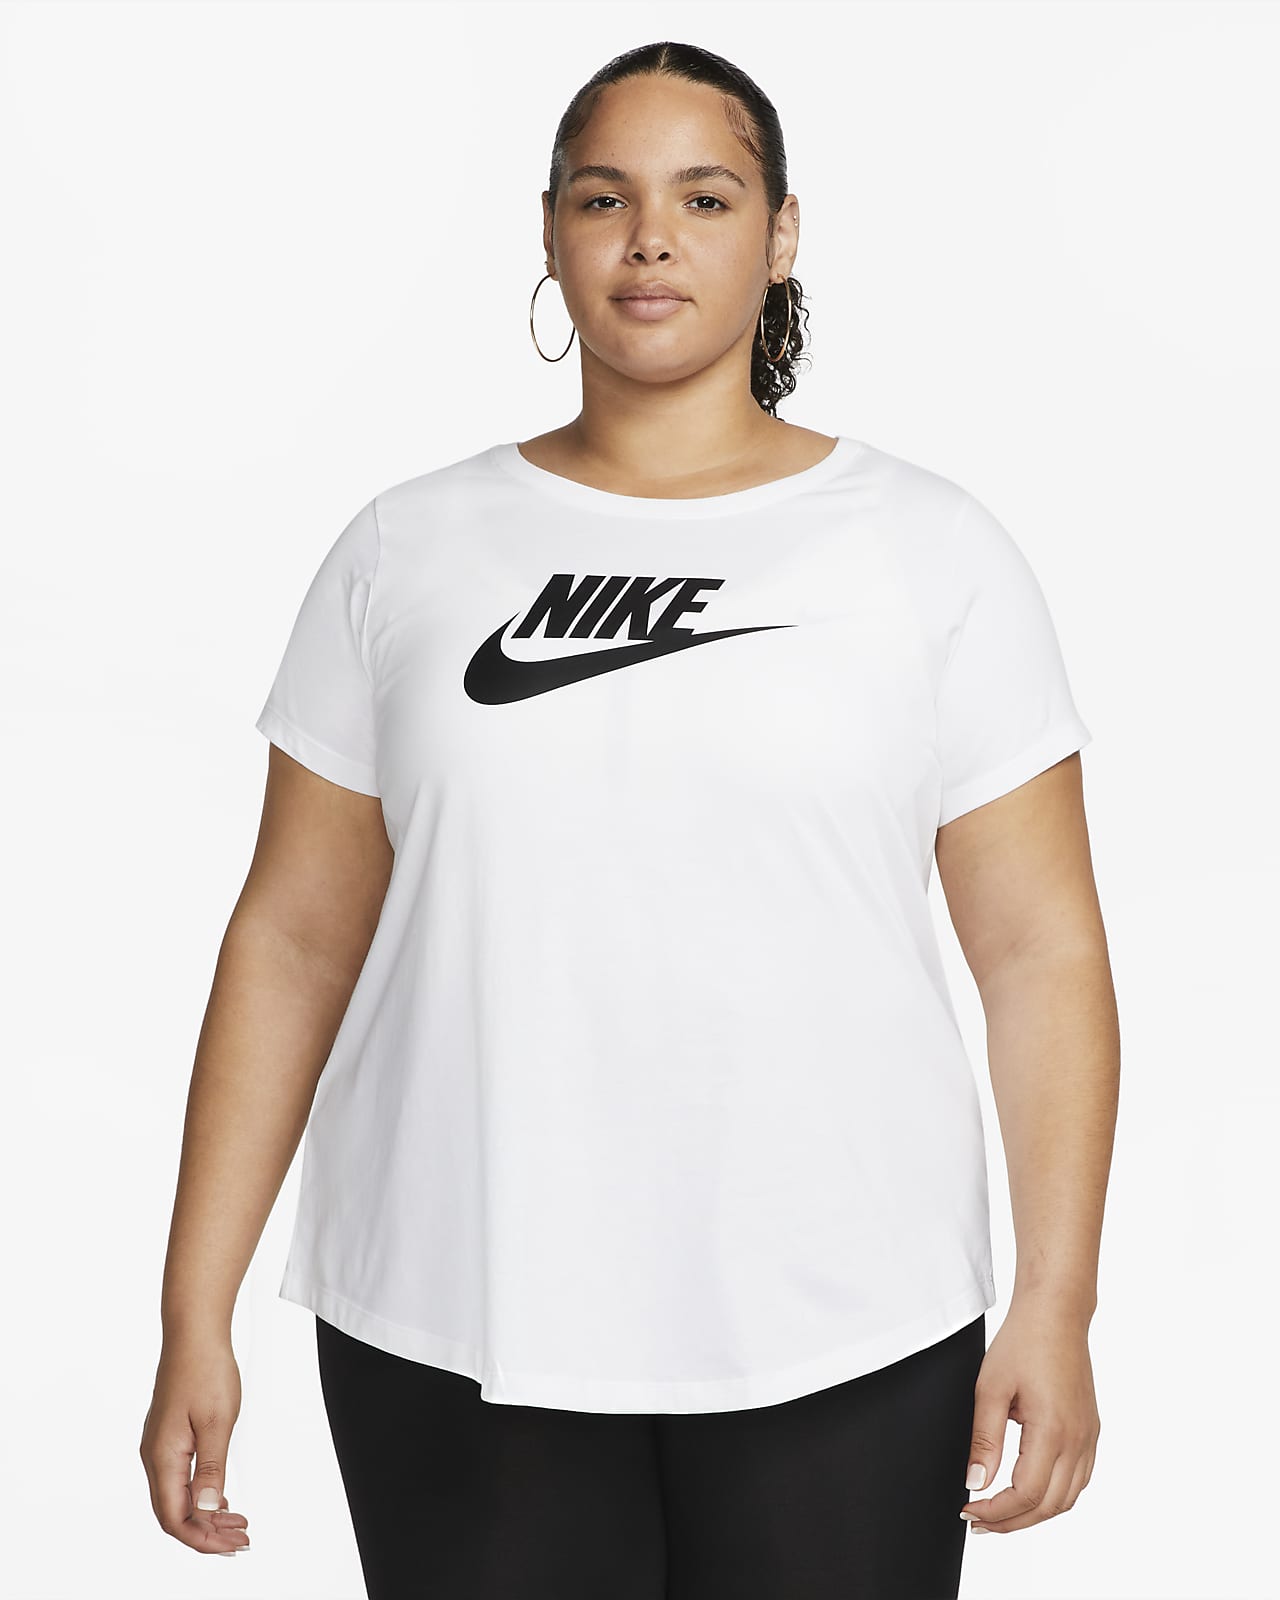 Women's T-Shirts. Sports & Casual Women's Tops. Nike IL